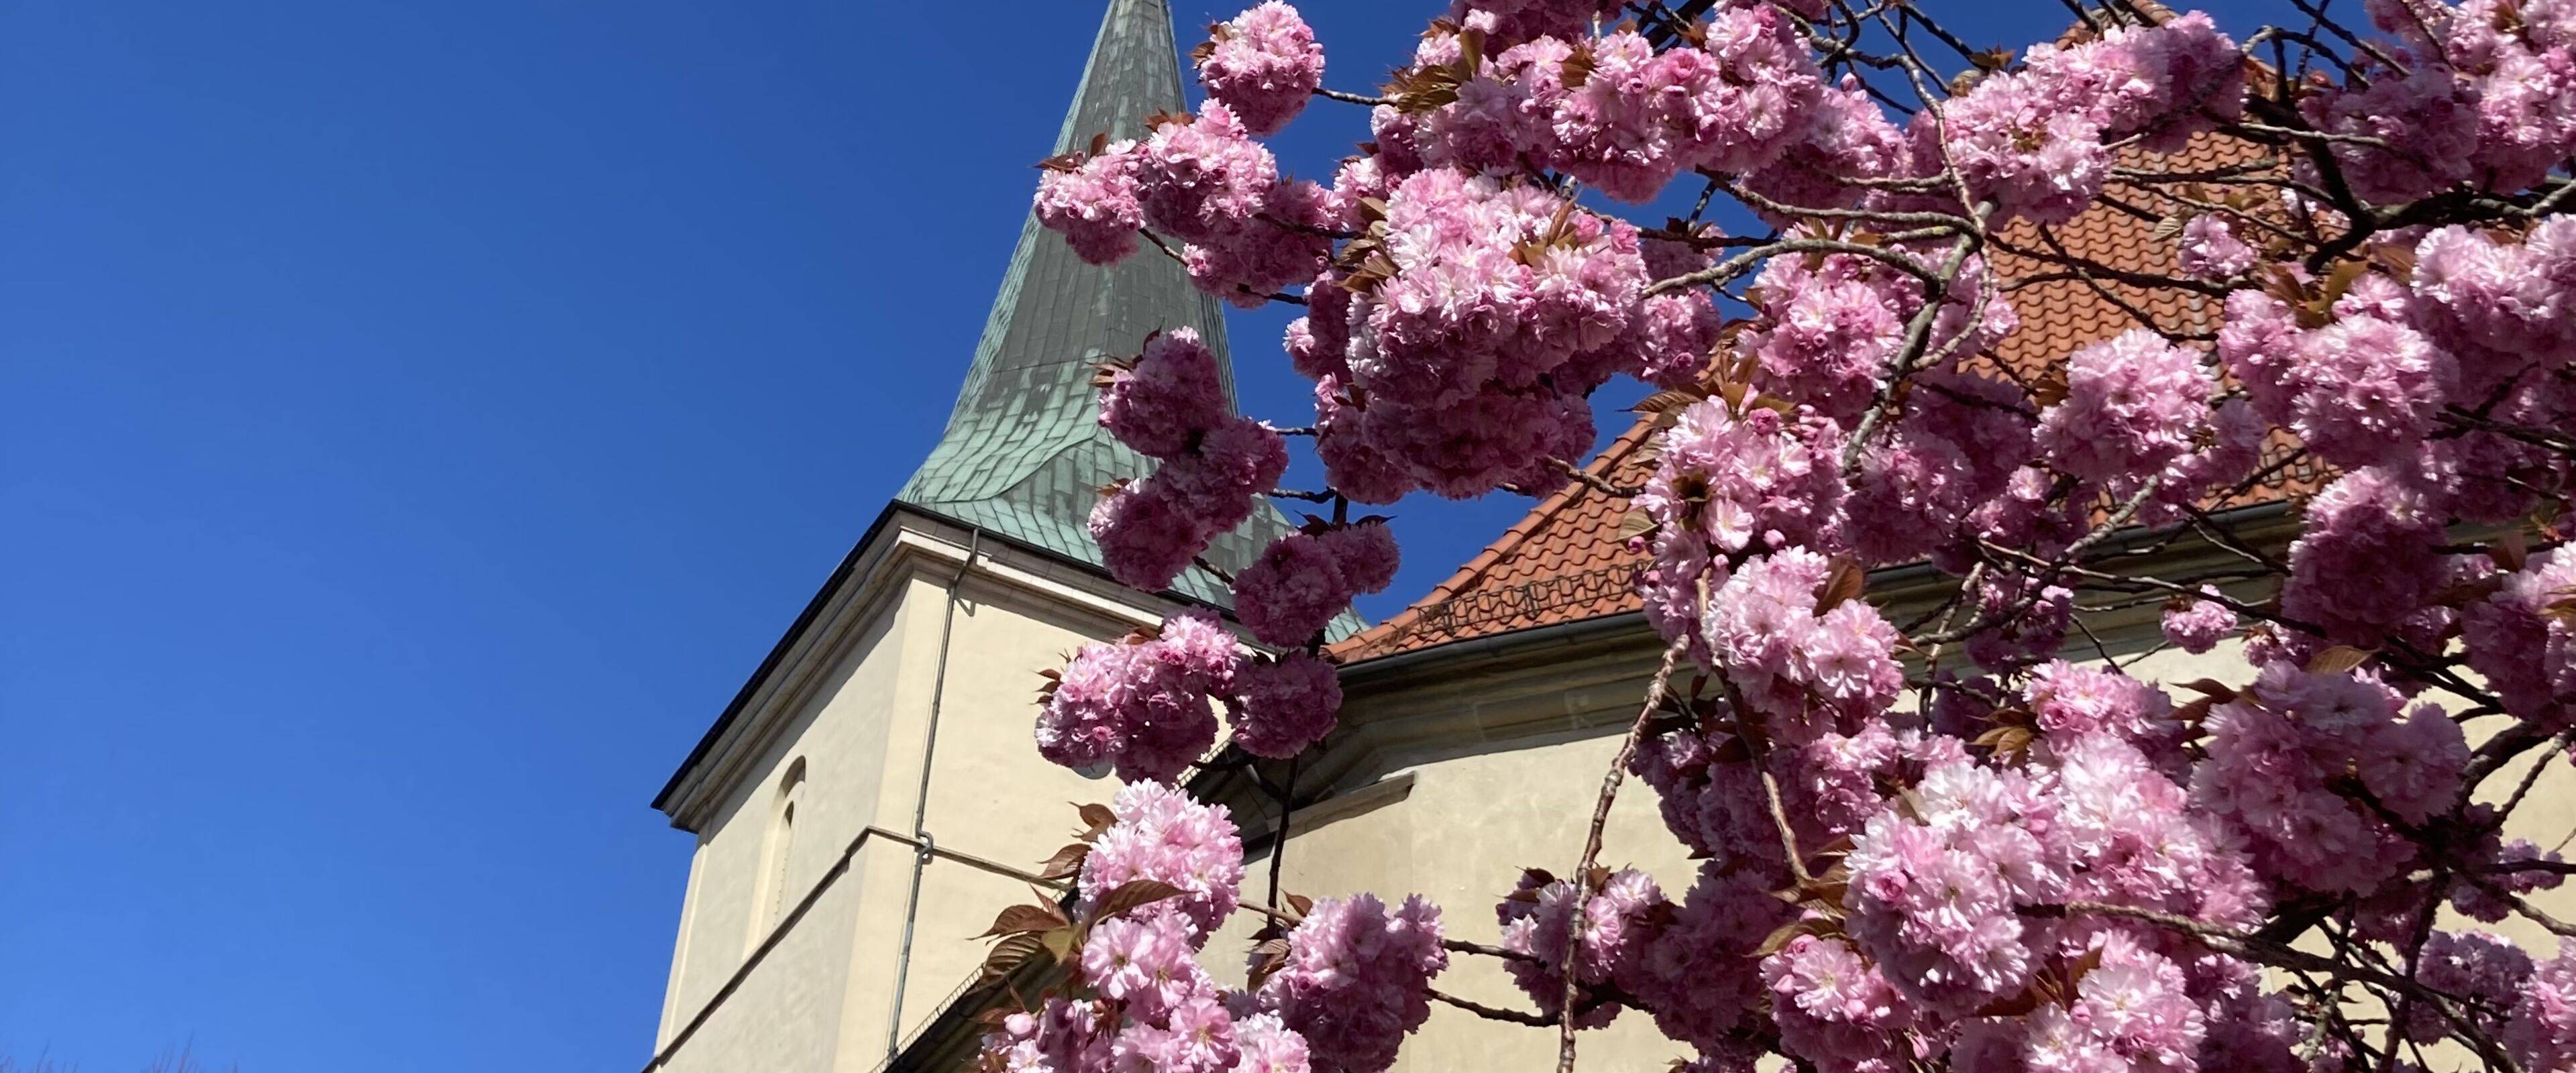 St.-Petri-Kirche im Frühling